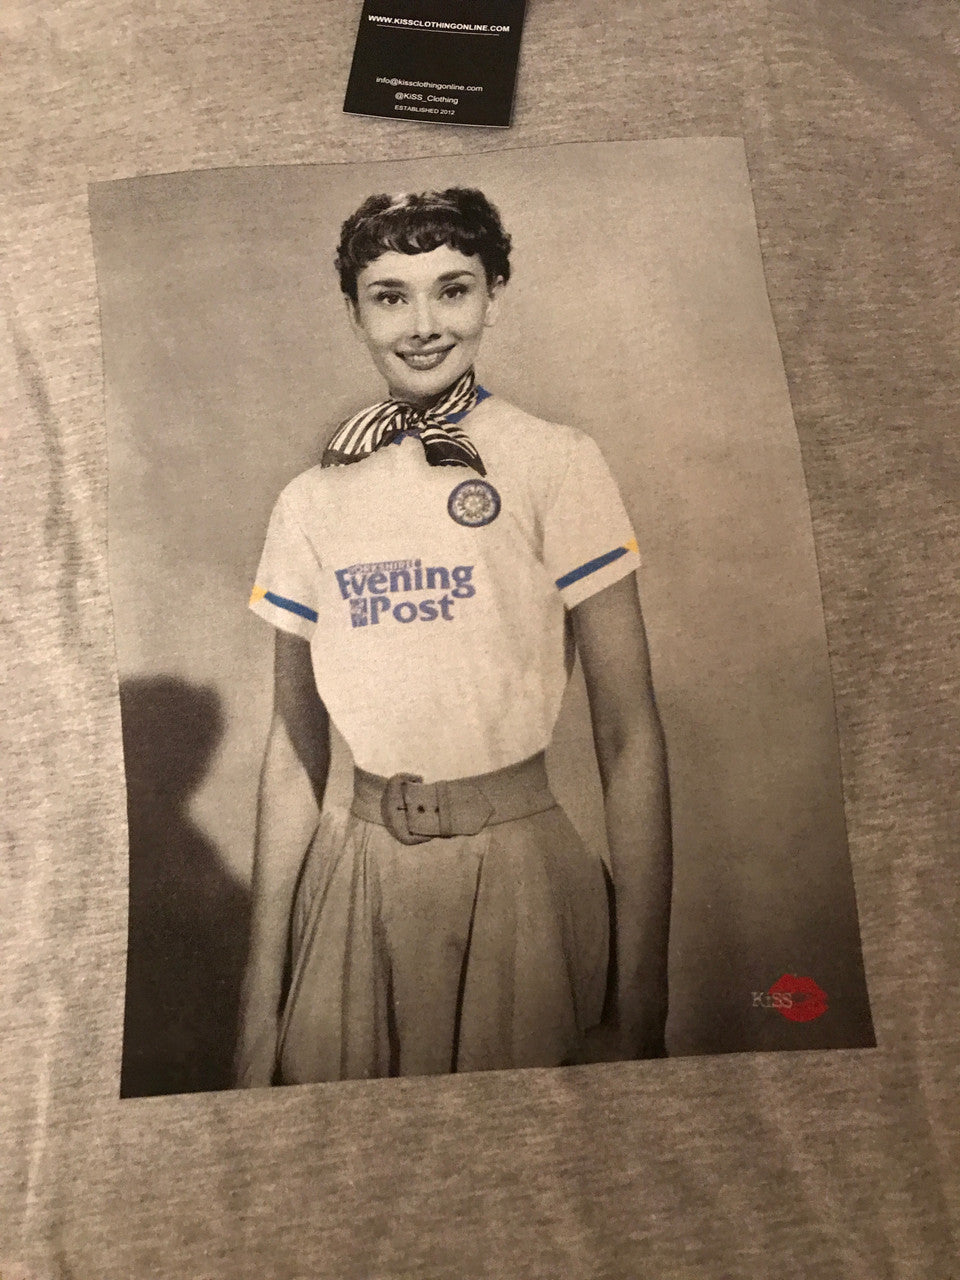 Custom Audrey Hepburn Football KiSS T-Shirt - Personalised, unique jersey - Pick any team - Football soccer - Gift Idea - Christmas Birthday Customise Leeds Liverpool Tottenham Spurs Man United